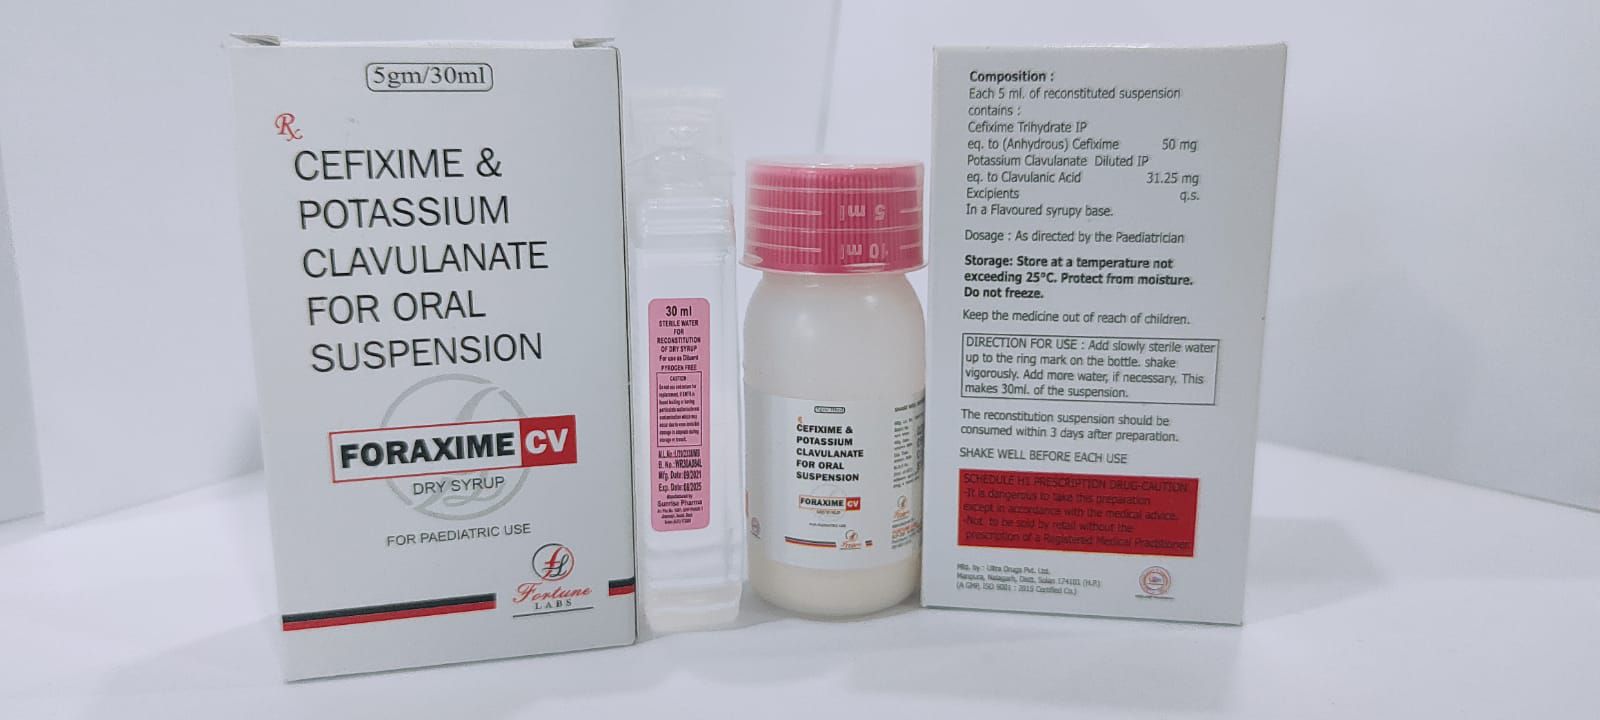 cefixime trihydrate 50 mg + potassium calvulanate 31.5mg (dry syrup) with wfi